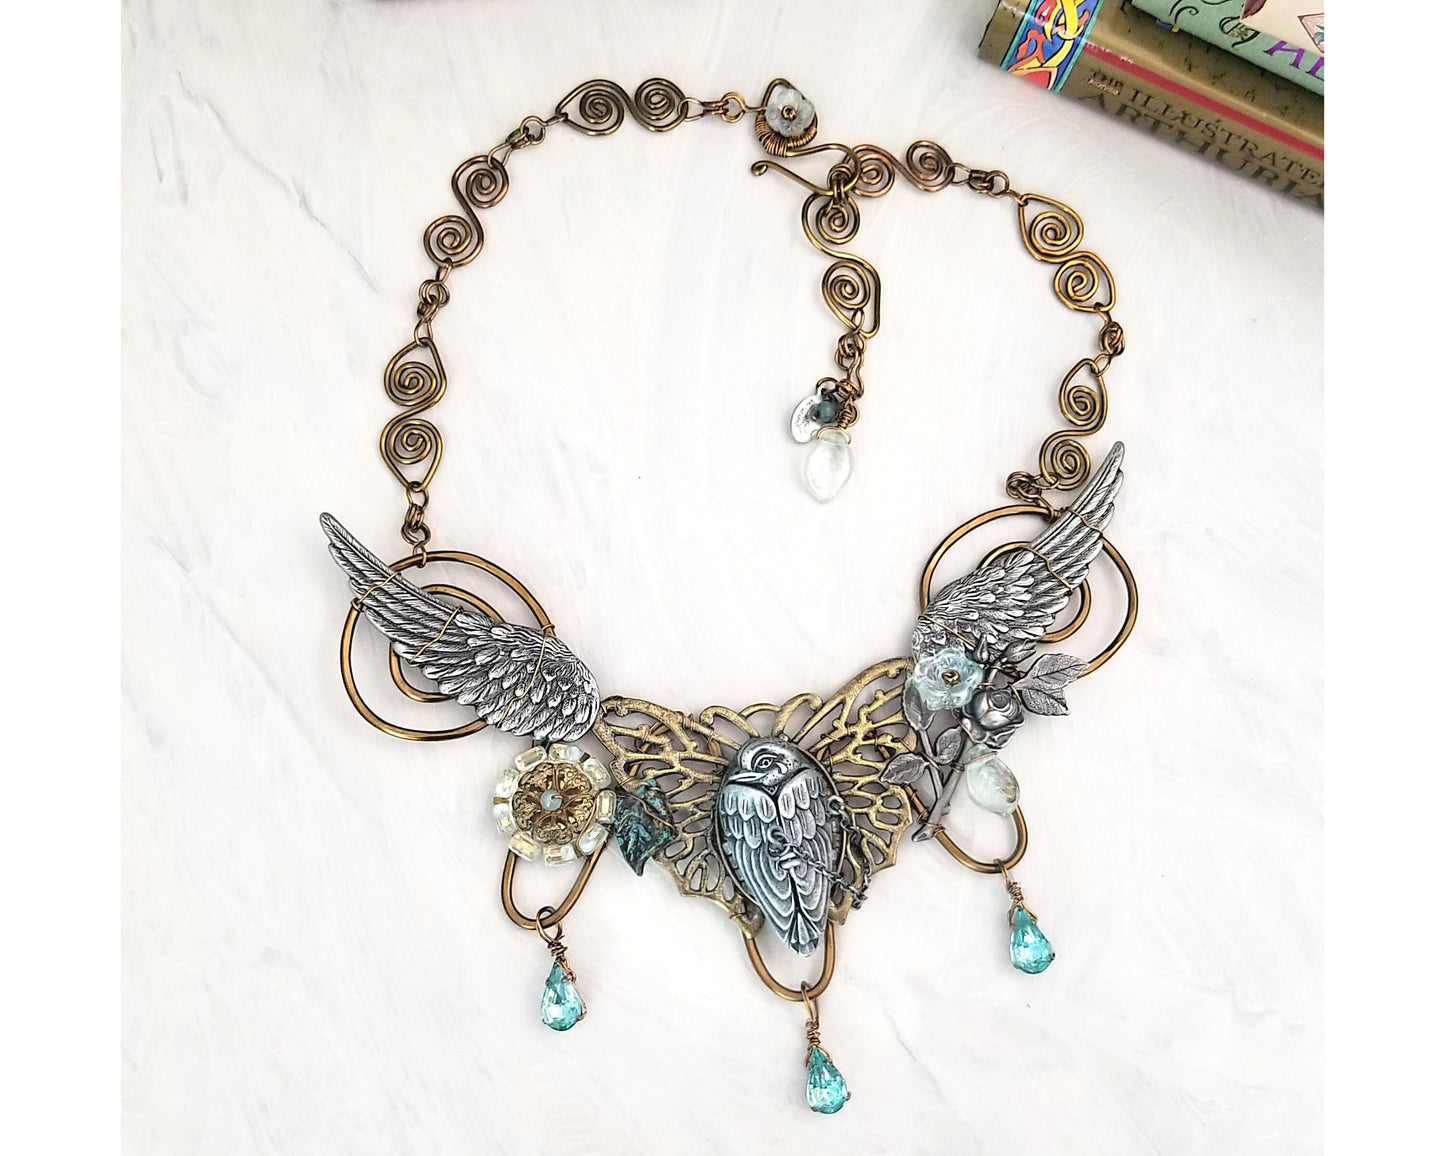 Fairytale Raven Bird Bib Statement Necklace in Aqua Blue Adjustable Length Fantasy Floral